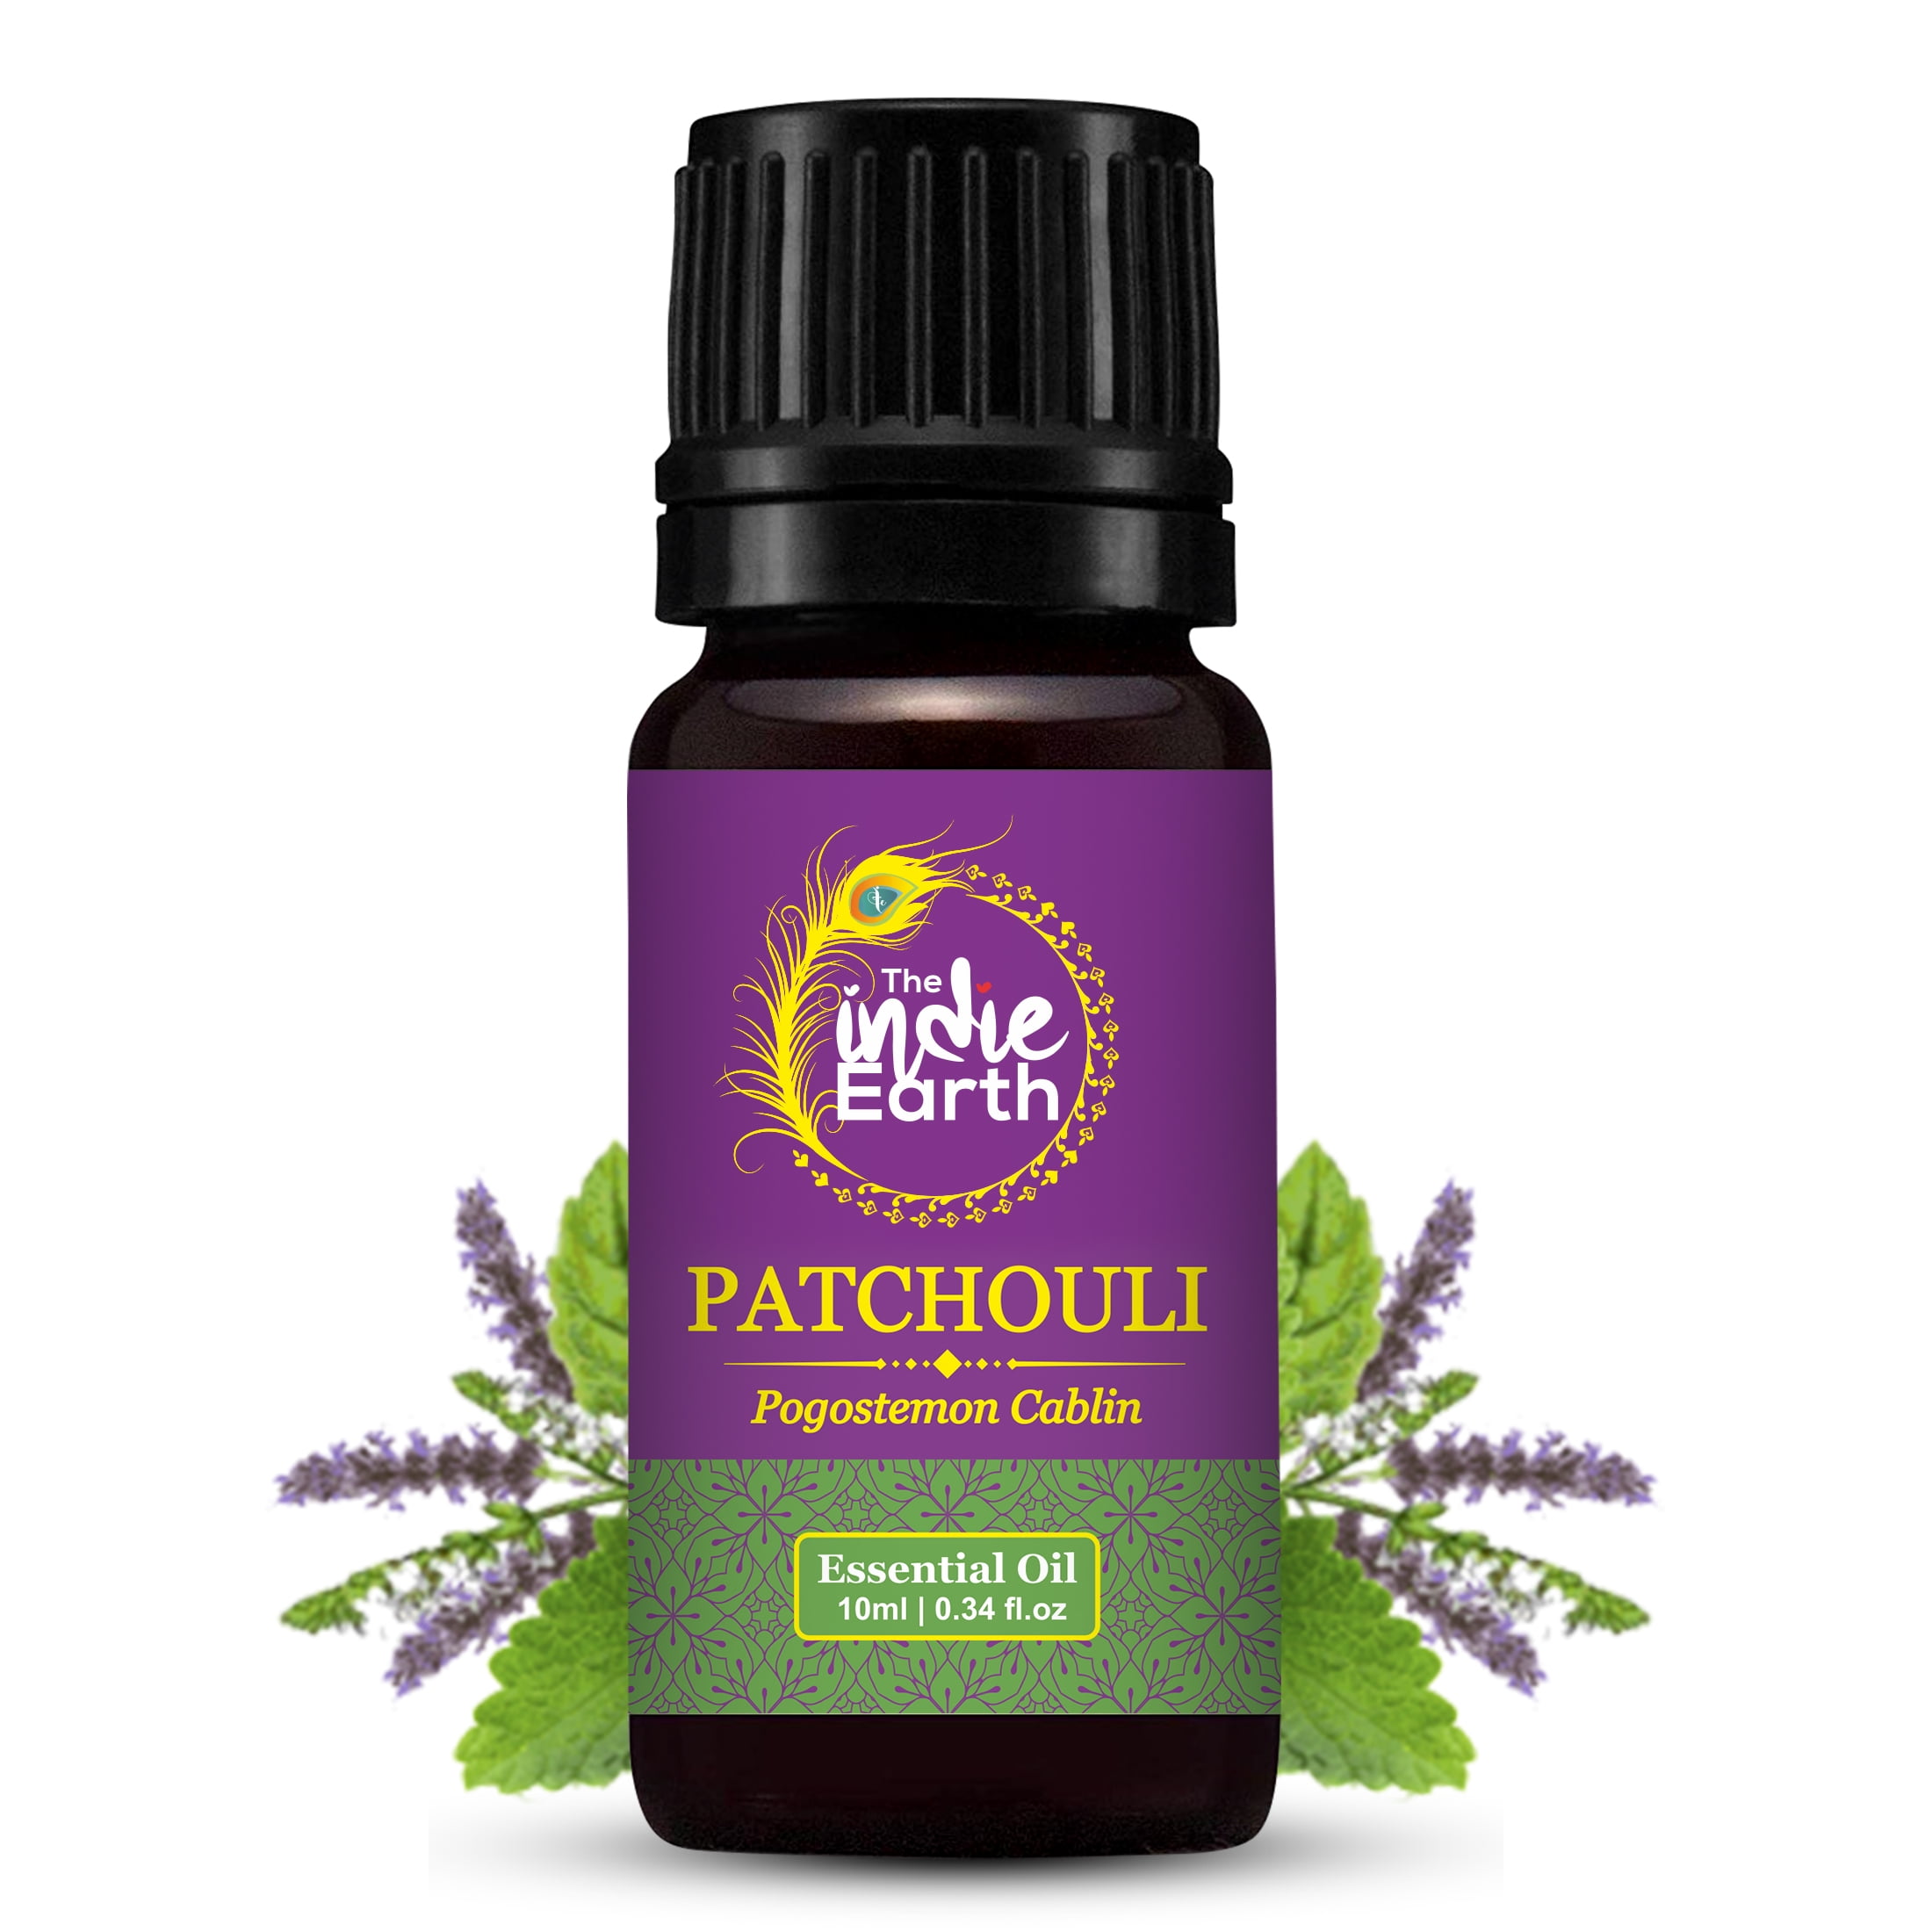 Patchouli Oil Uses, Patchouli Essential Oil